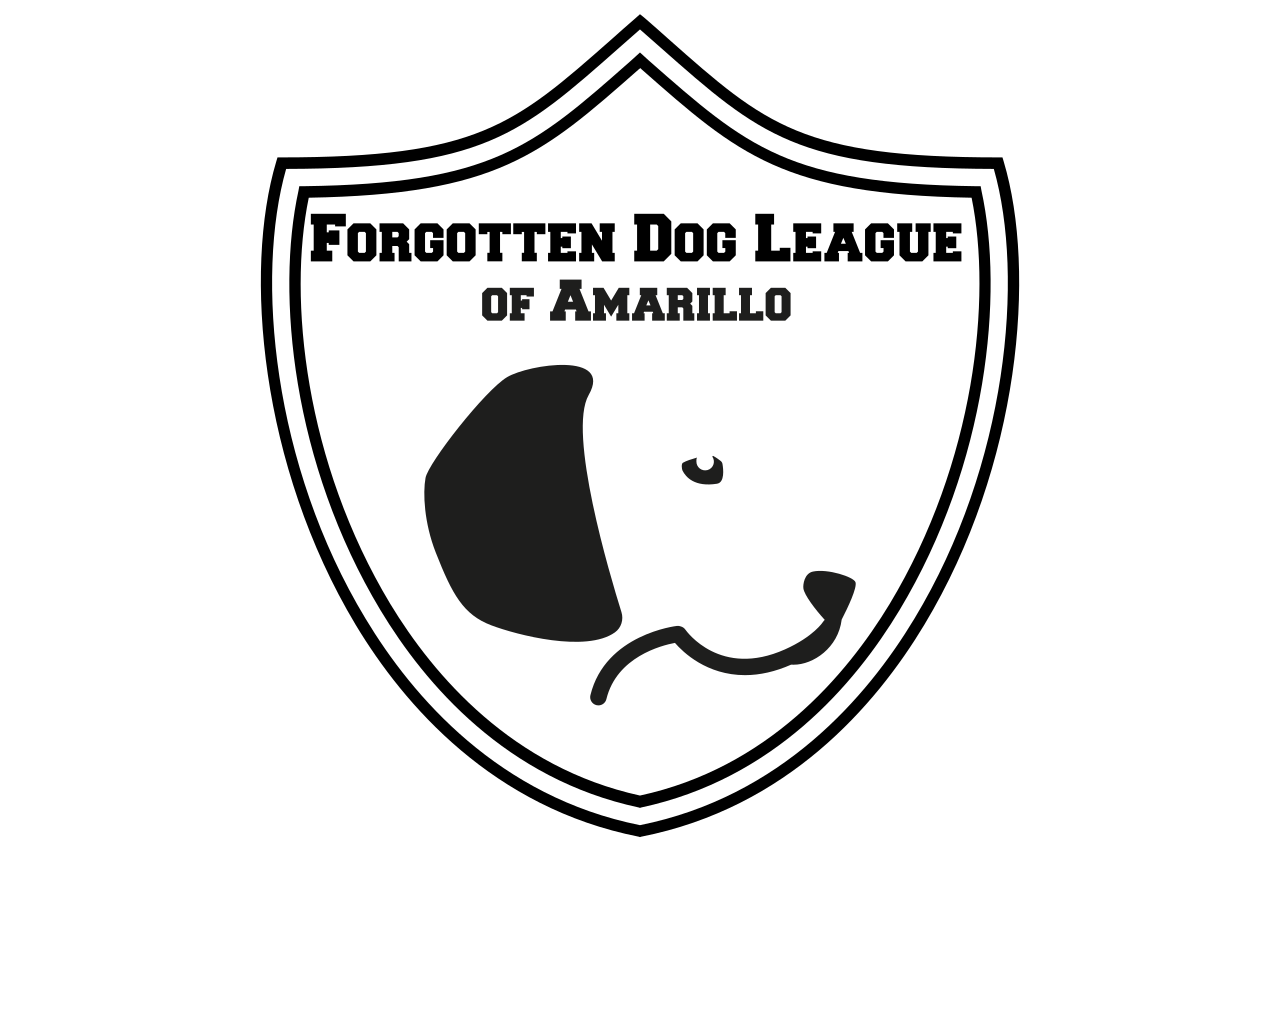 Forgotten Dog League Of Amarillo